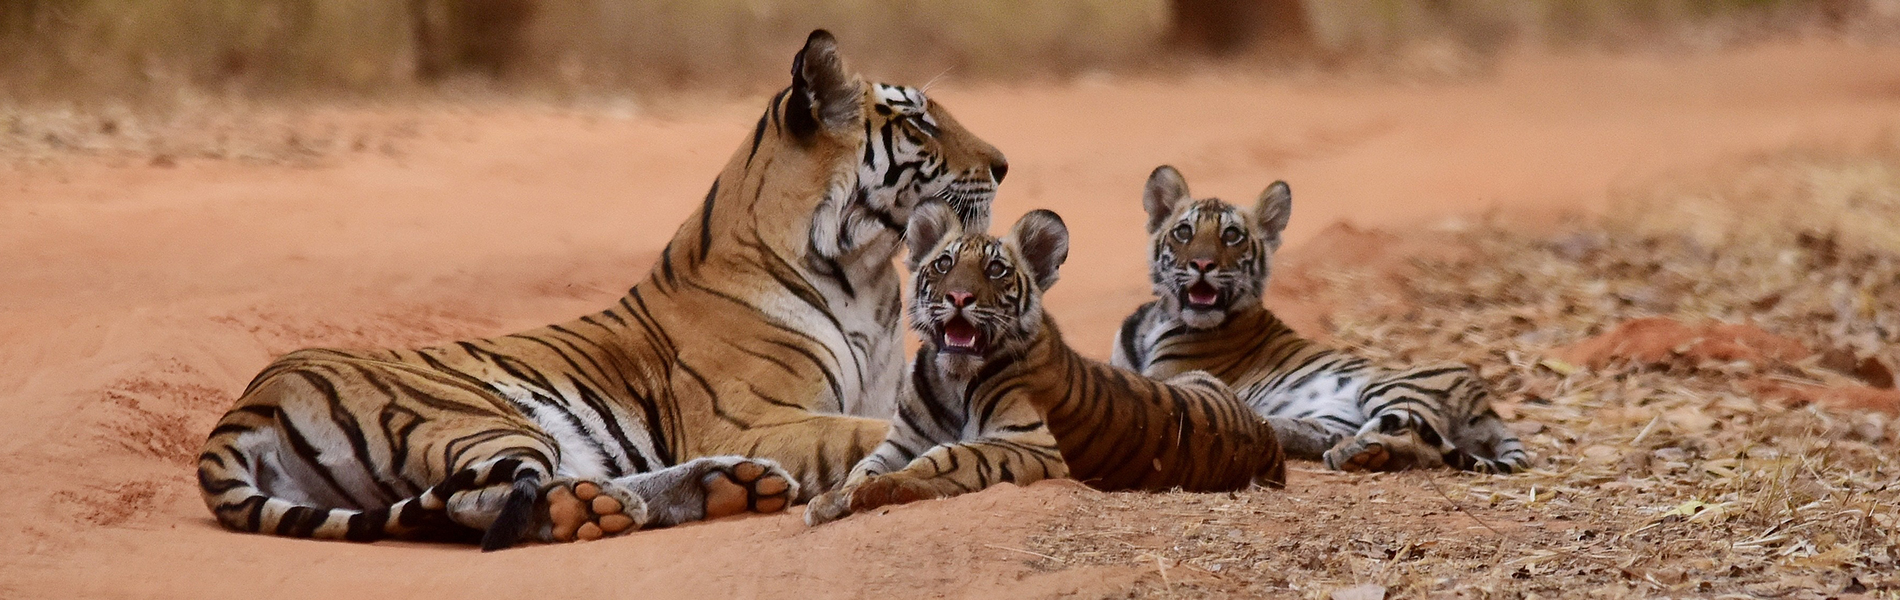 Gradlyn Petshipping Header Tiertransport Tiger Babys Zoo Russland